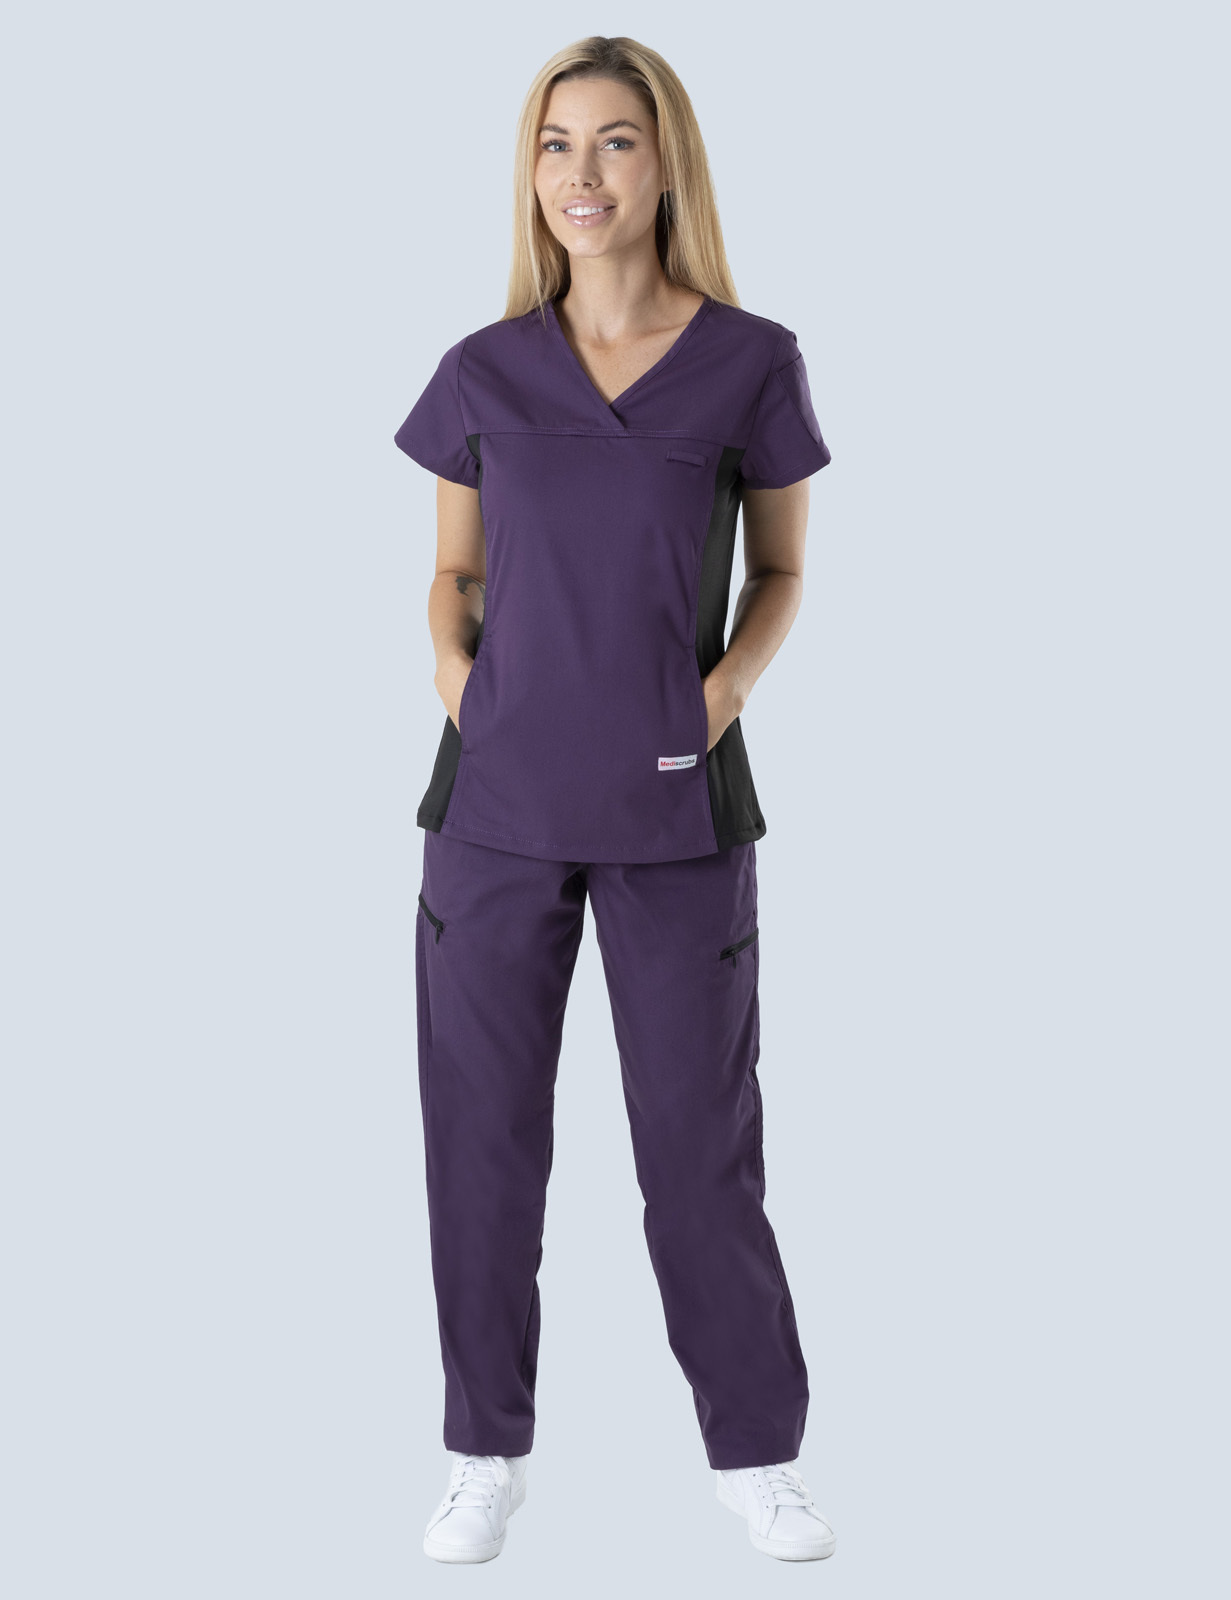 Logan Hospital Special Care Nursery Uniform Set Bundle (Women's Fit Spandex Top and Cargo Pants in Aubergine incl Logo)